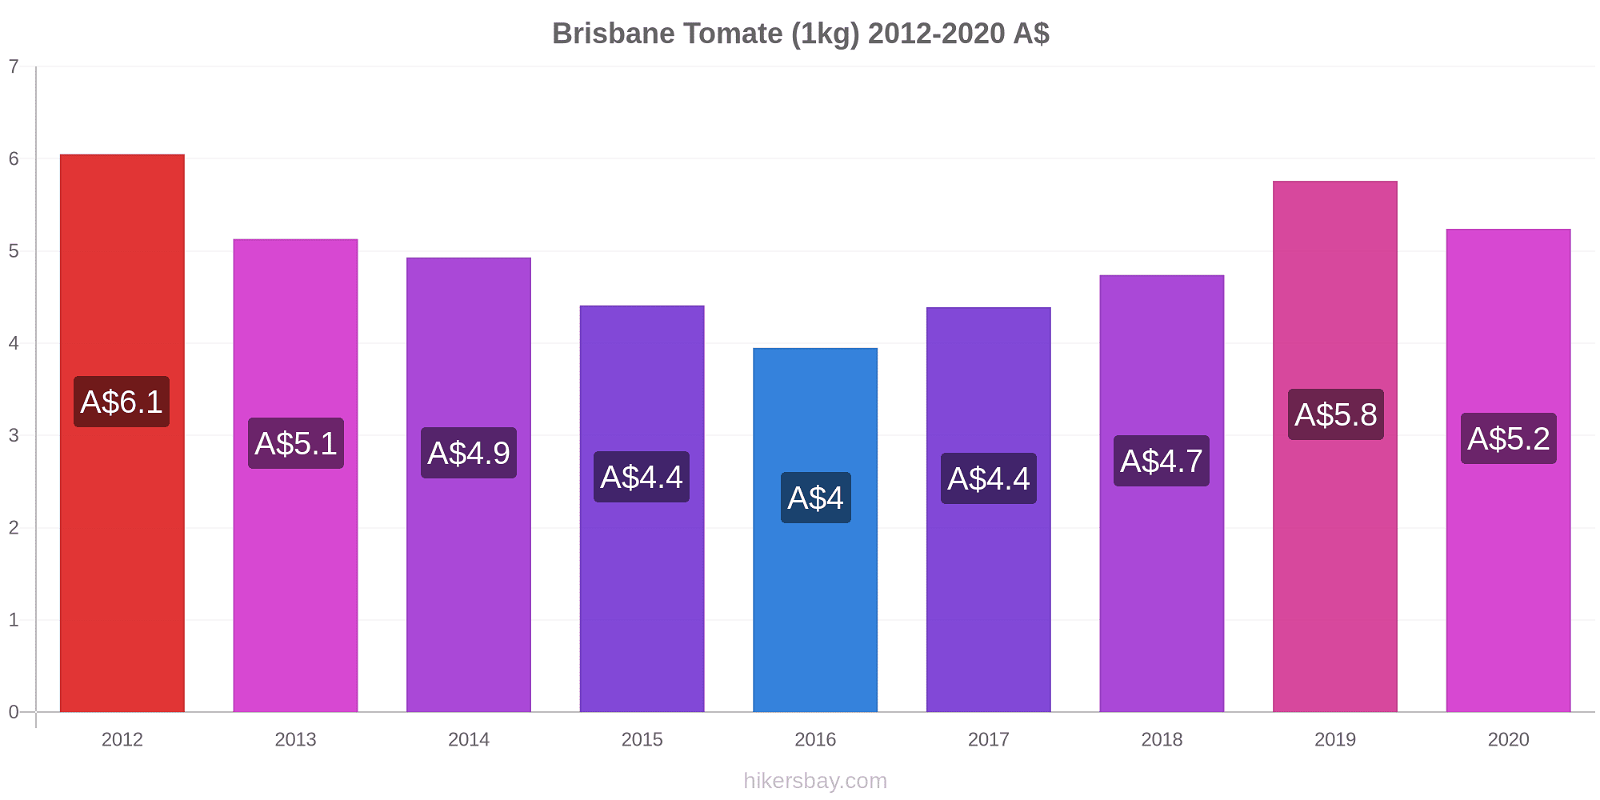 Brisbane changements de prix Tomate (1kg) hikersbay.com